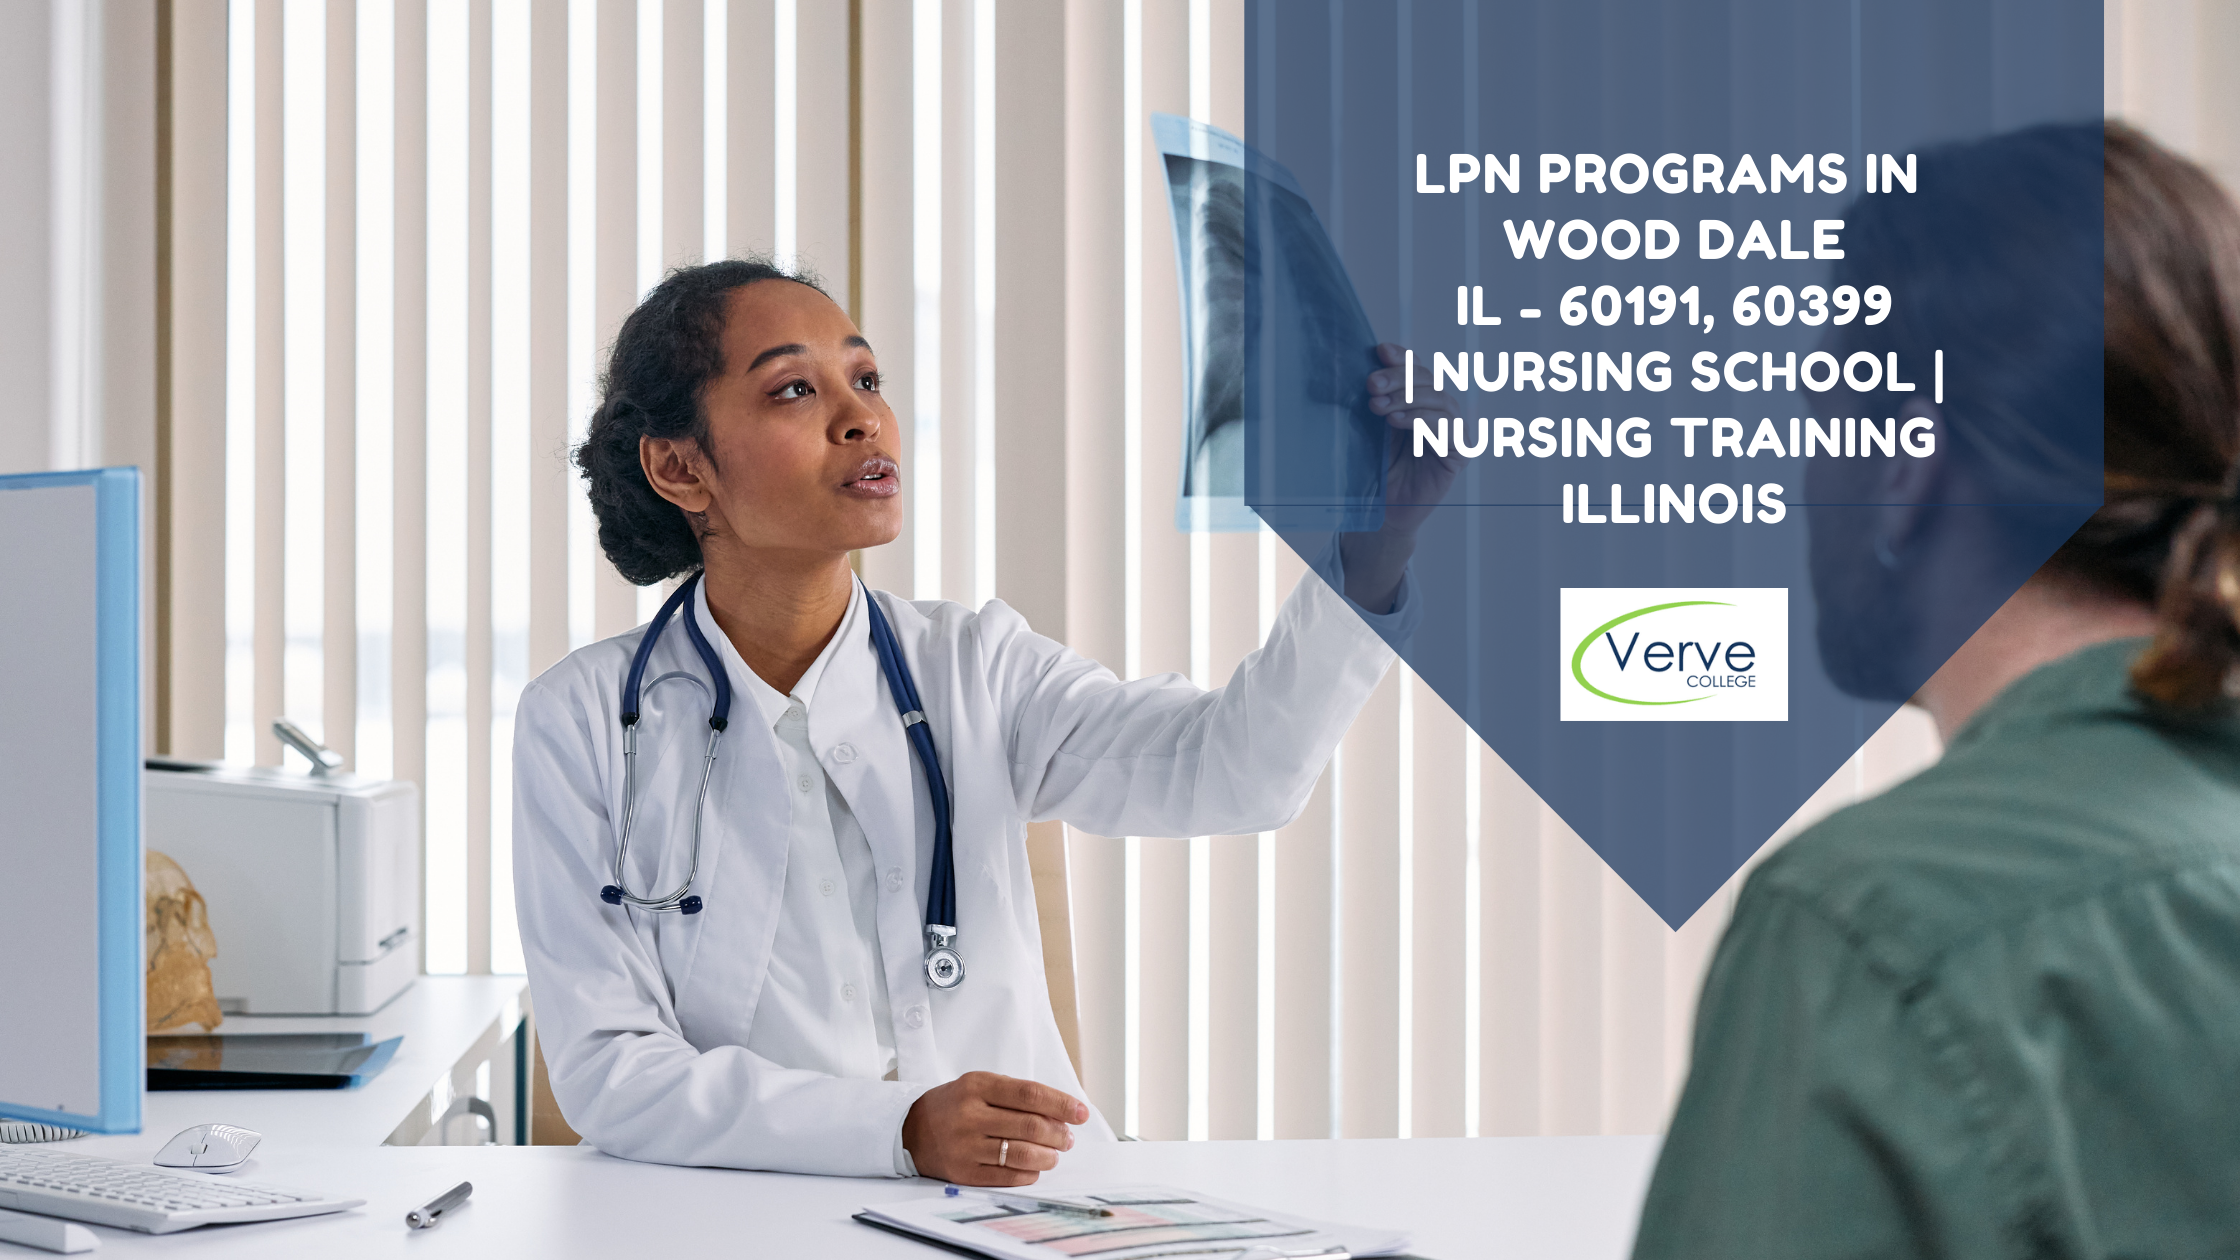 LPN Programs in Wood Dale, IL – 60191, 60399 | Nursing School | Nursing Training Illinois